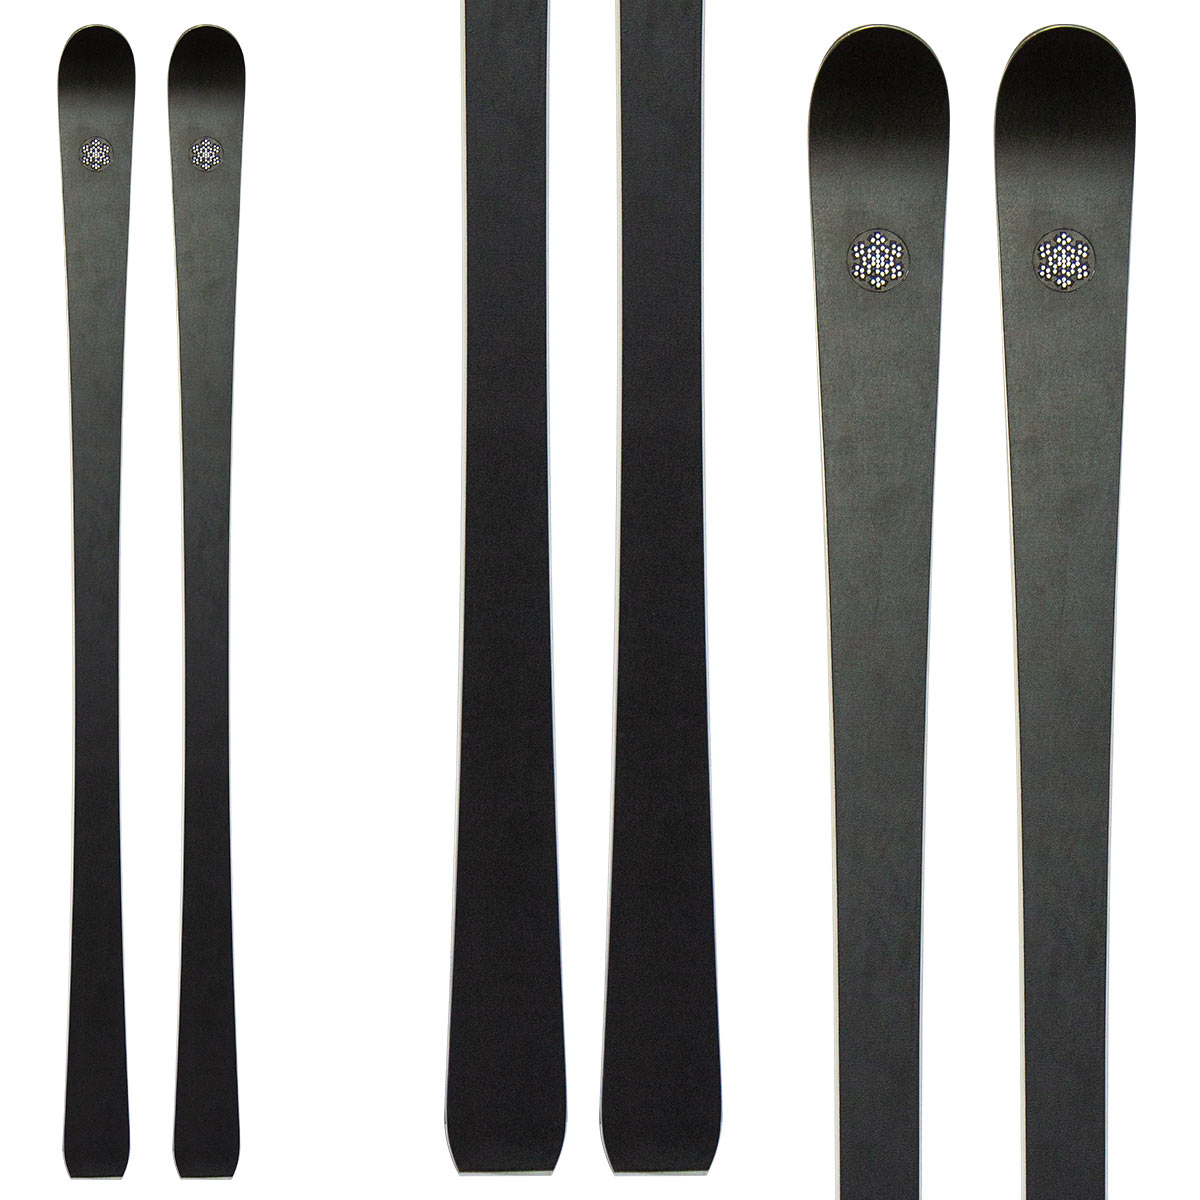  Sci Bottero Ski Swarovski + X-Step plate + VM412 (Colore: nero, Taglia: 166) 